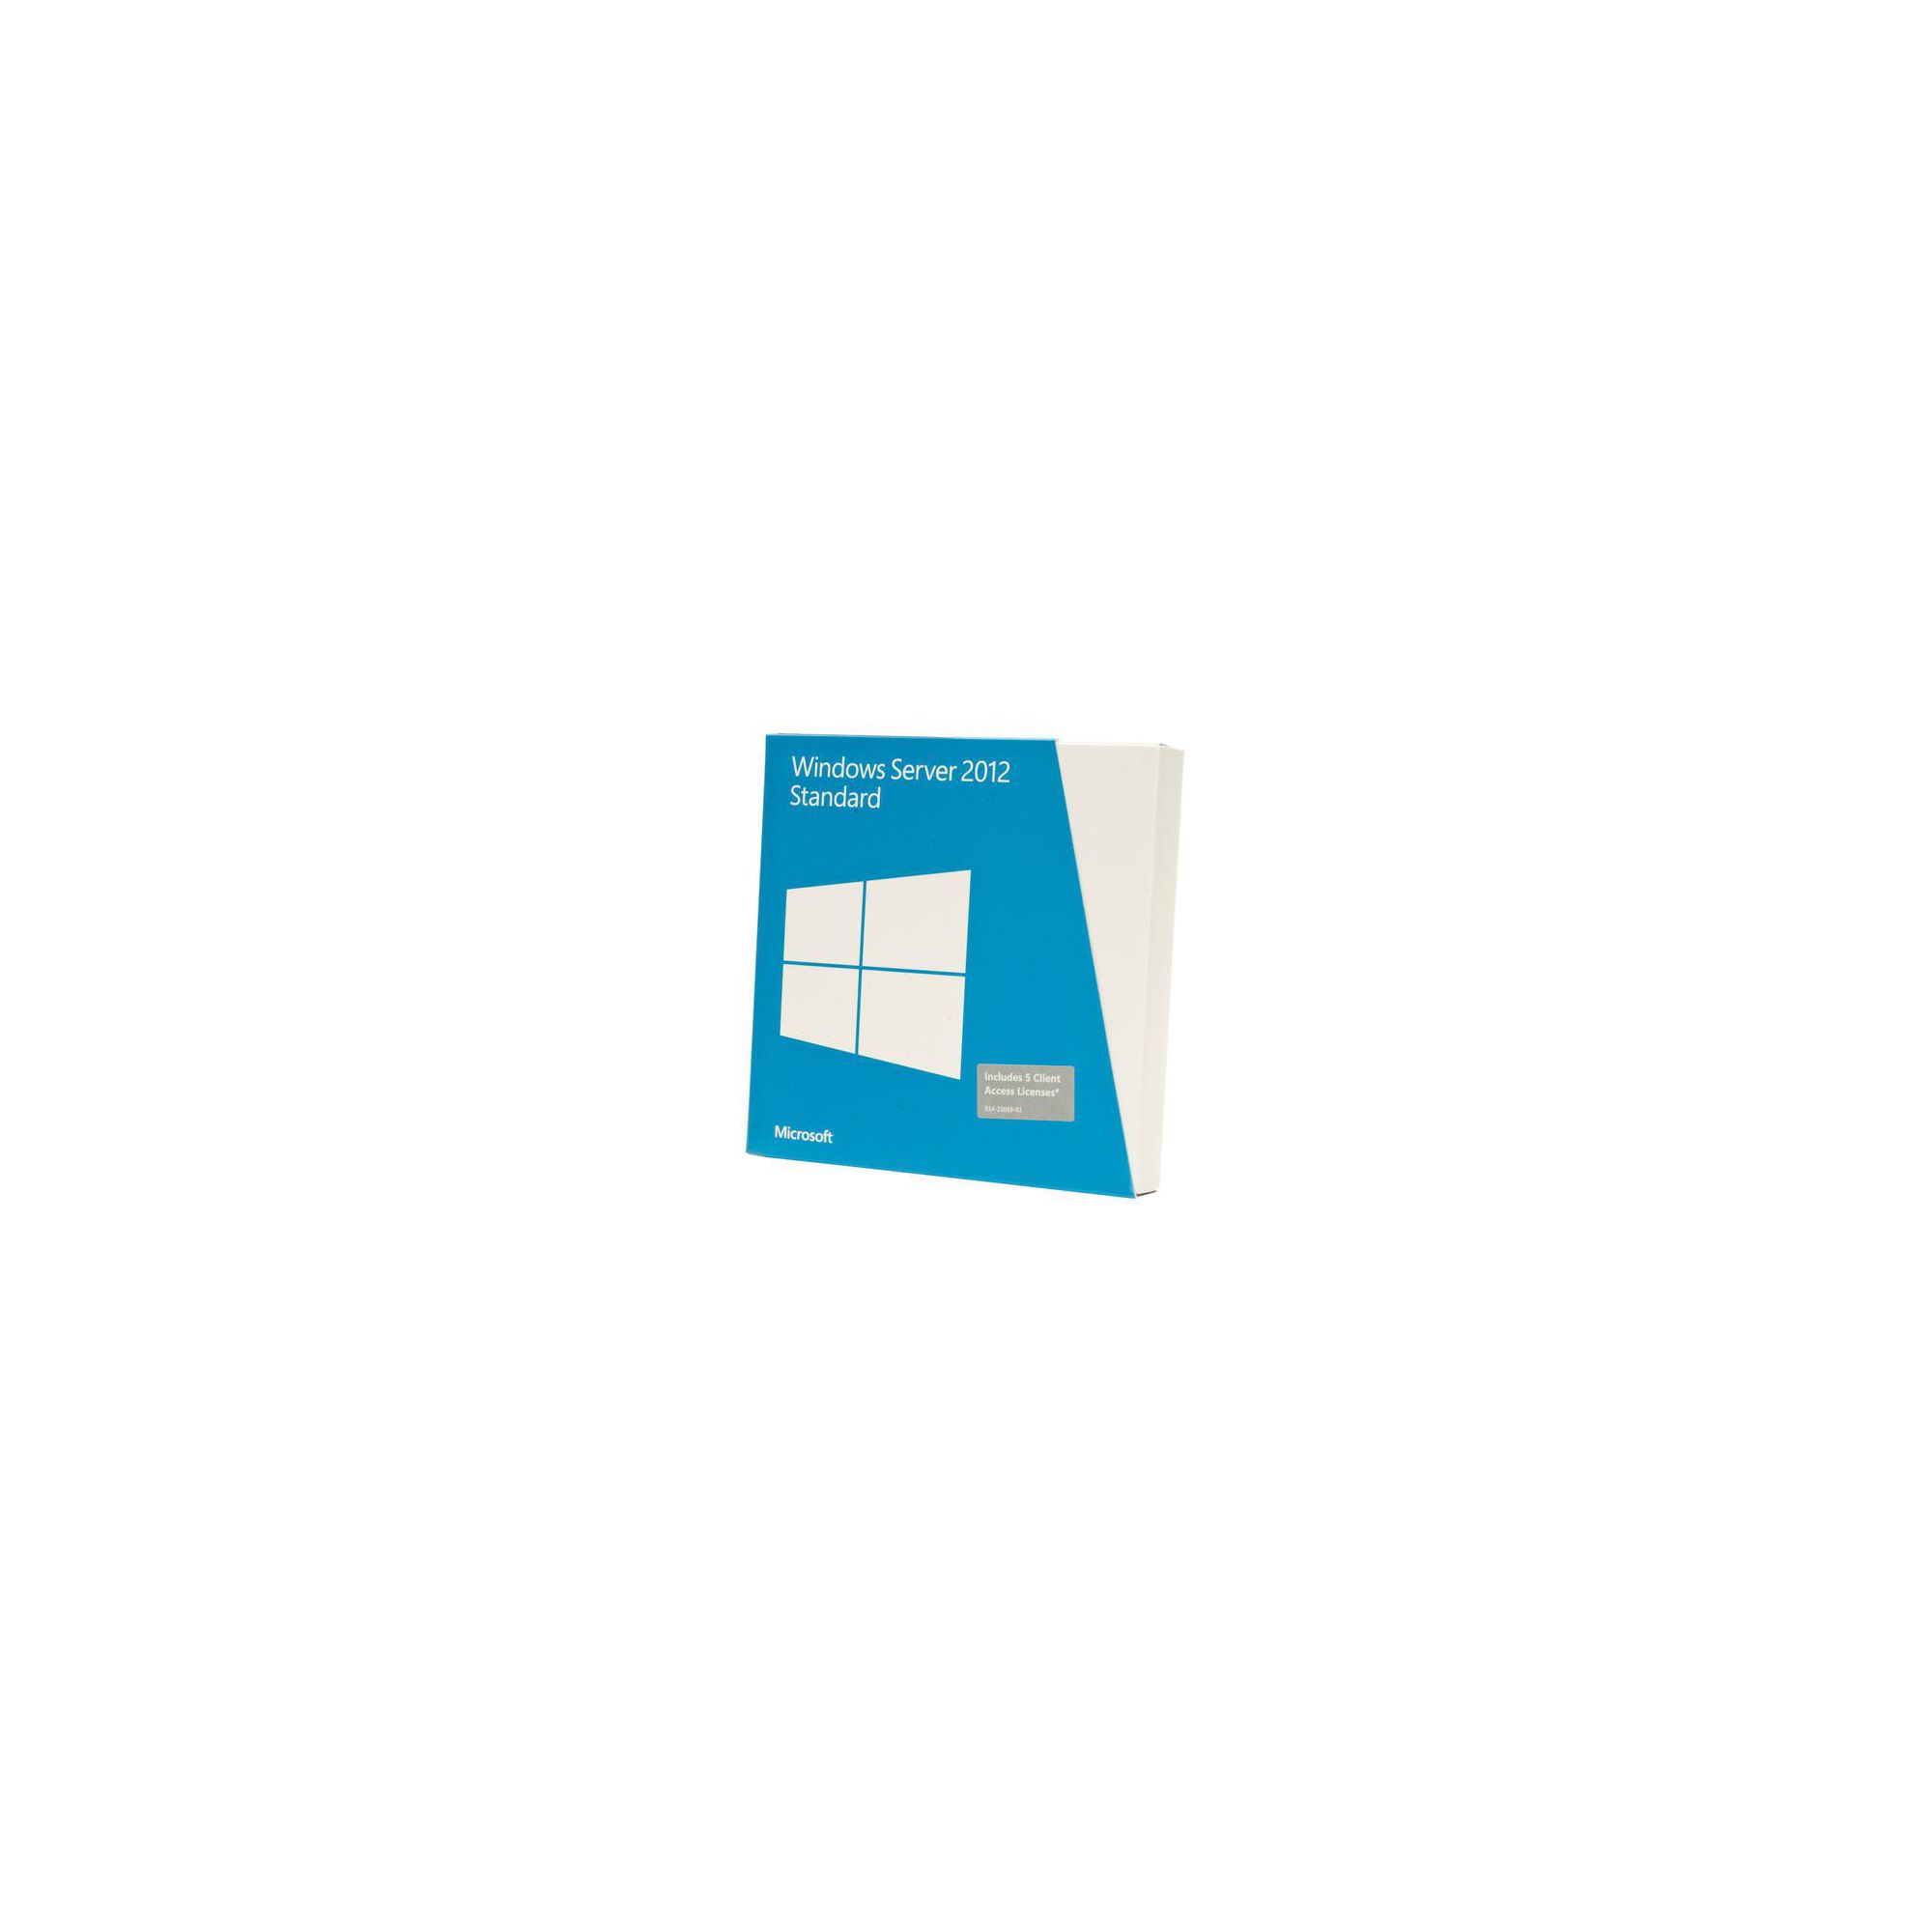 OEM - Microsoft Windows Server 2012 Standard Edition 2 CPU/2 Virtual Machines (Single Pack) at Tesco Direct